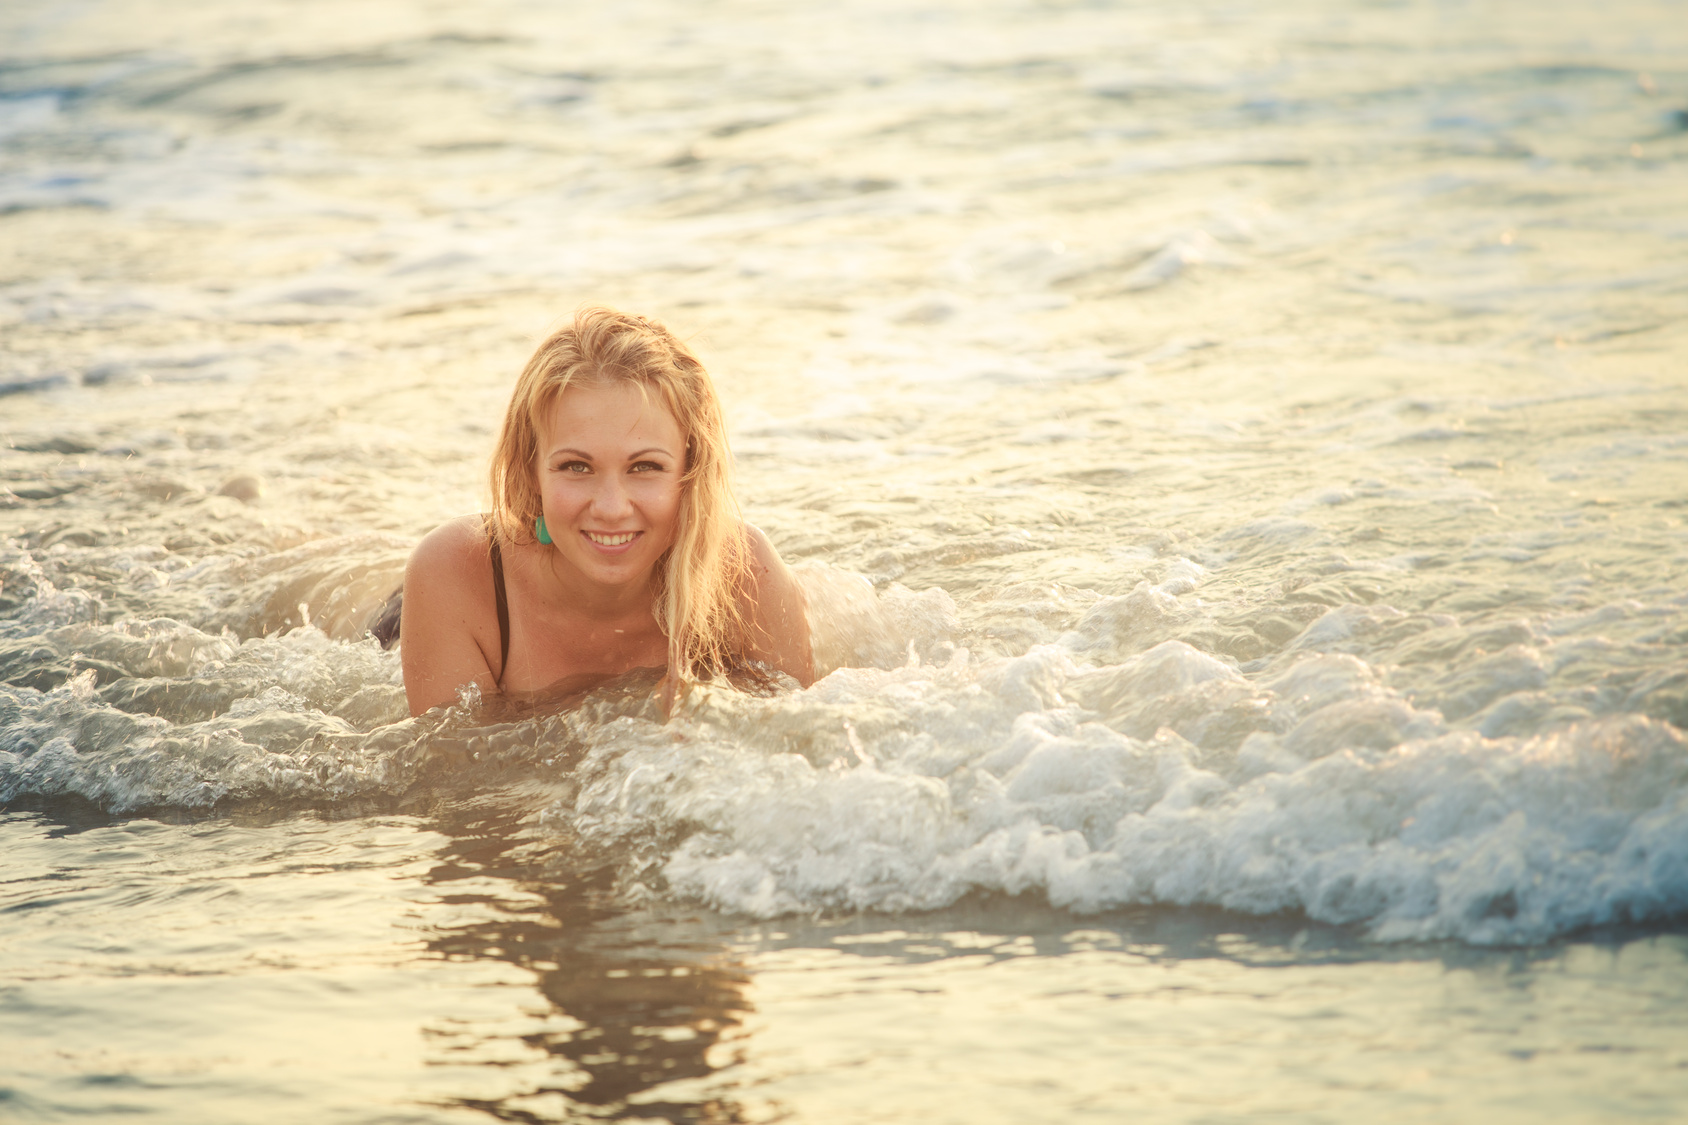 beautiful blonde girl in swimming suit